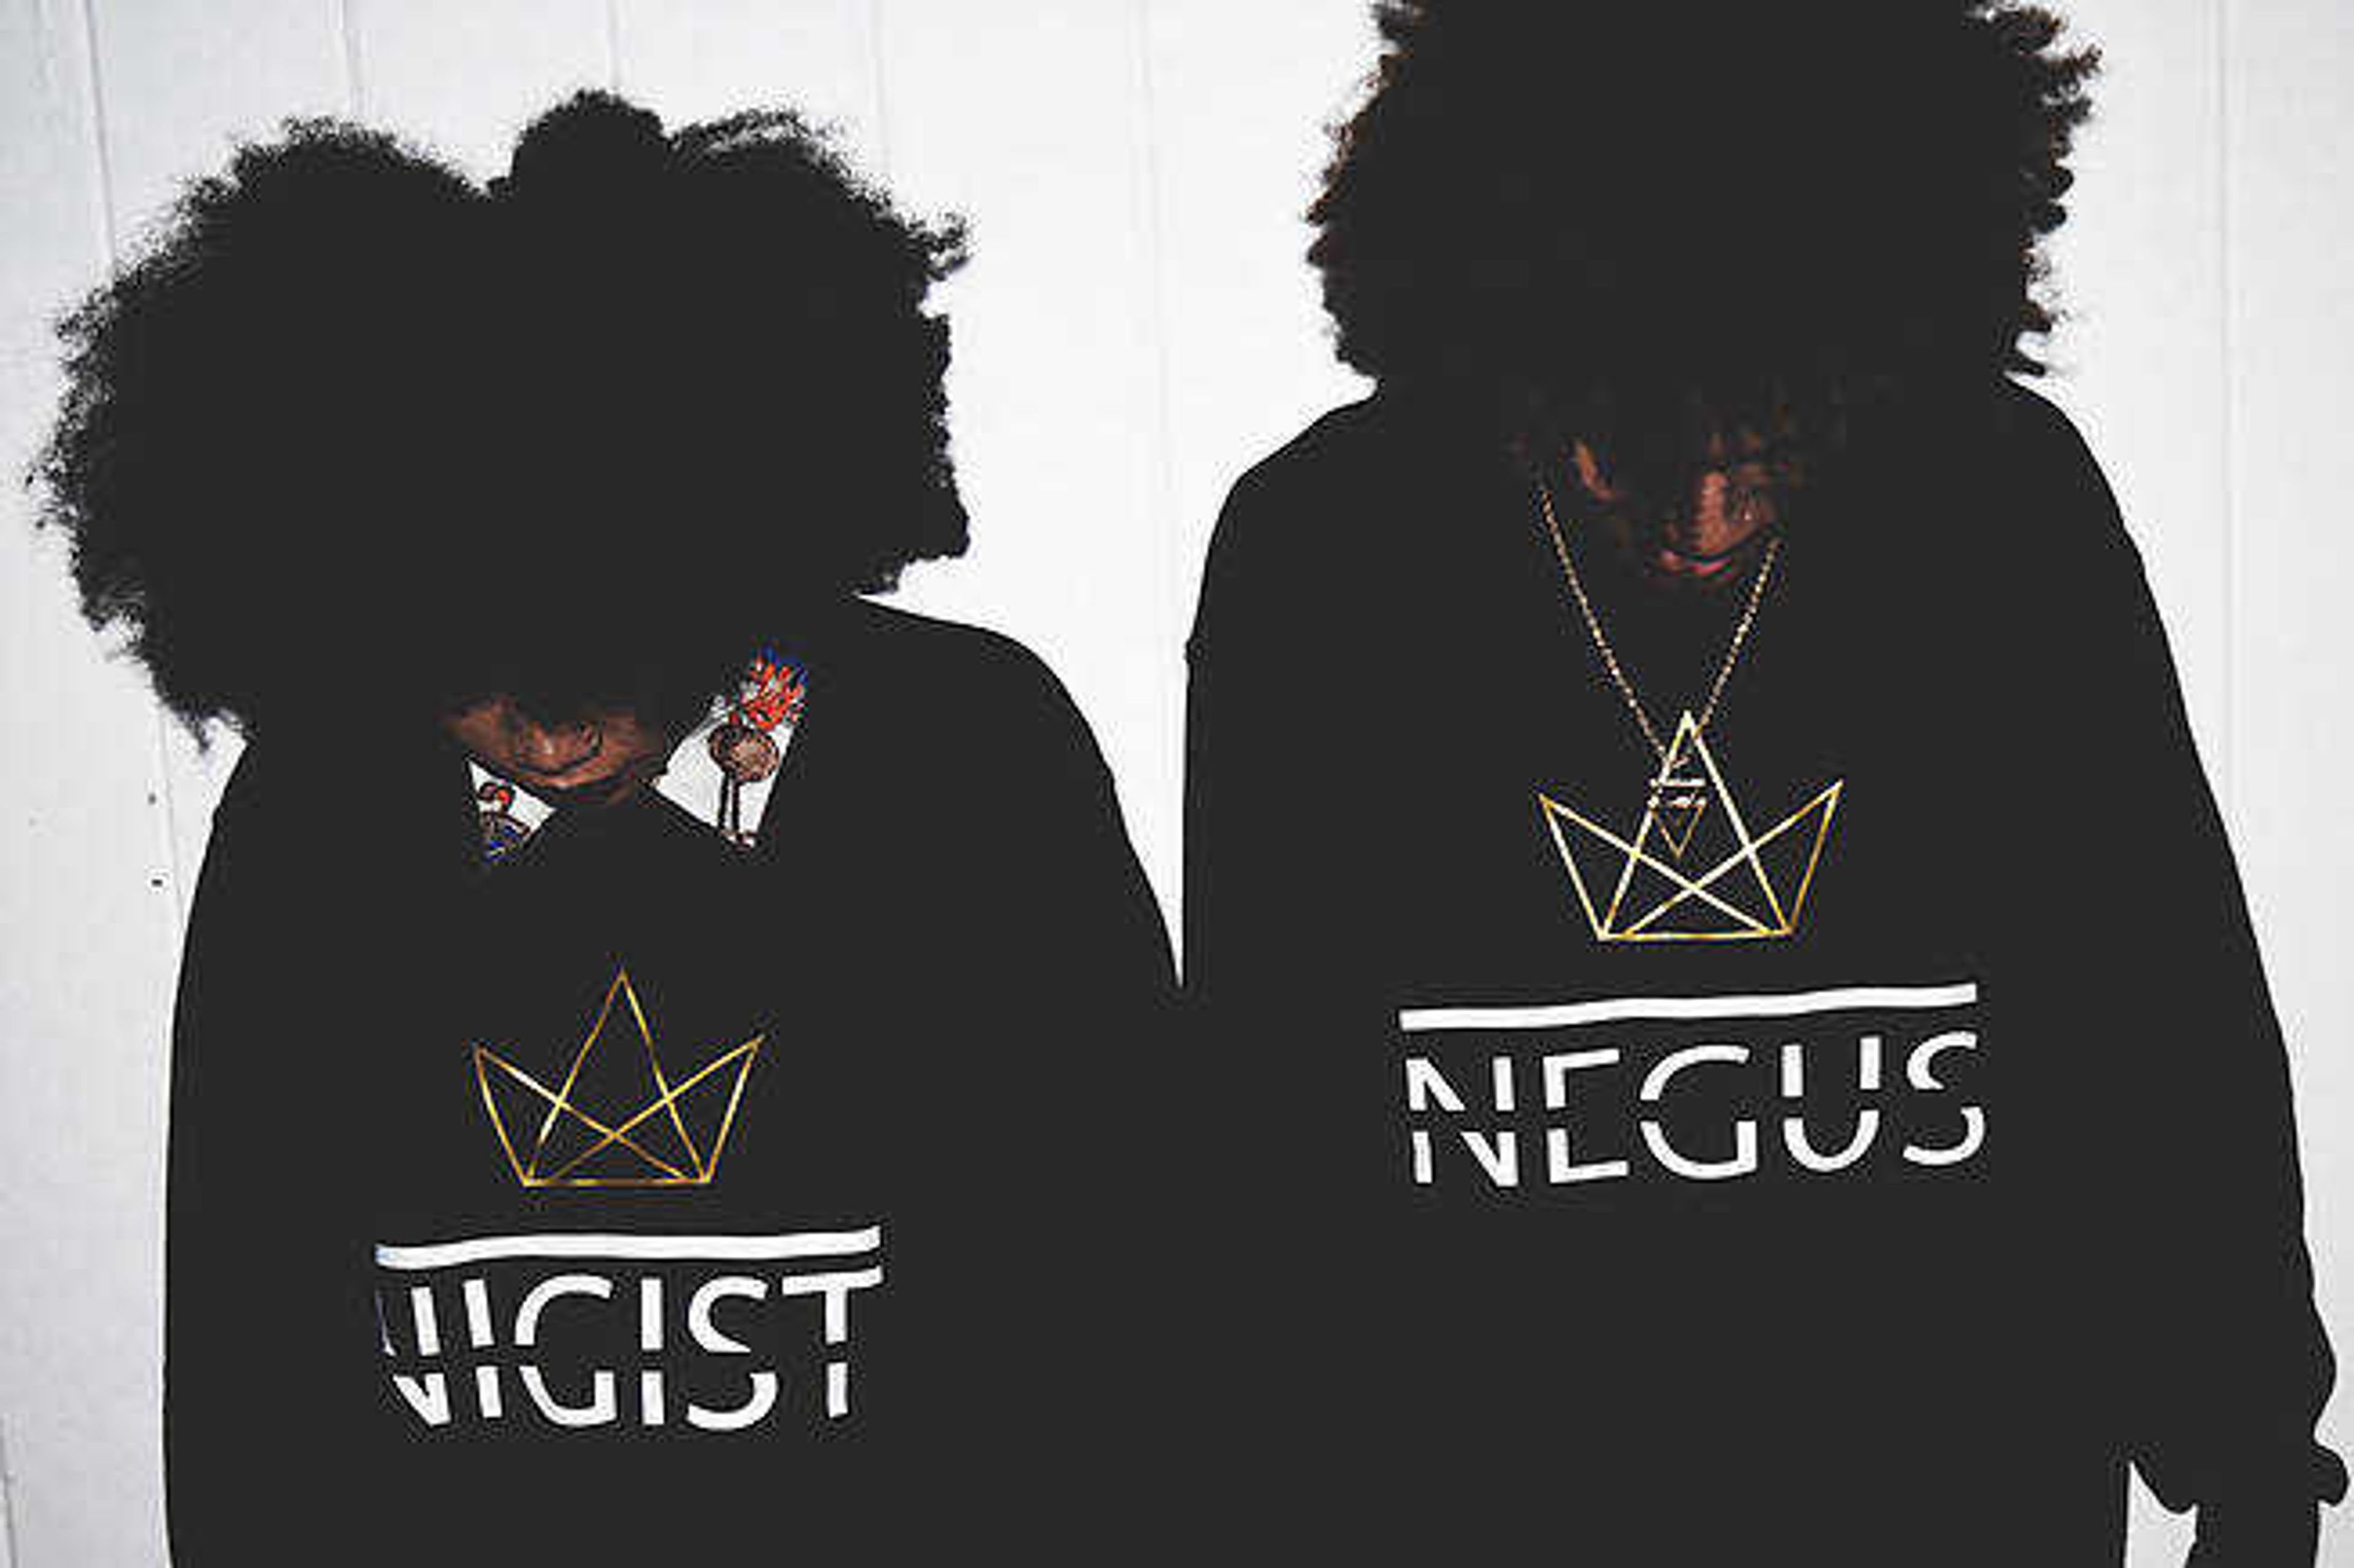 Nyara Williams, Southeast Missouri State University senior, released her Negus and Nigist sweatshirts from her black.clothing line on Oct. 14.